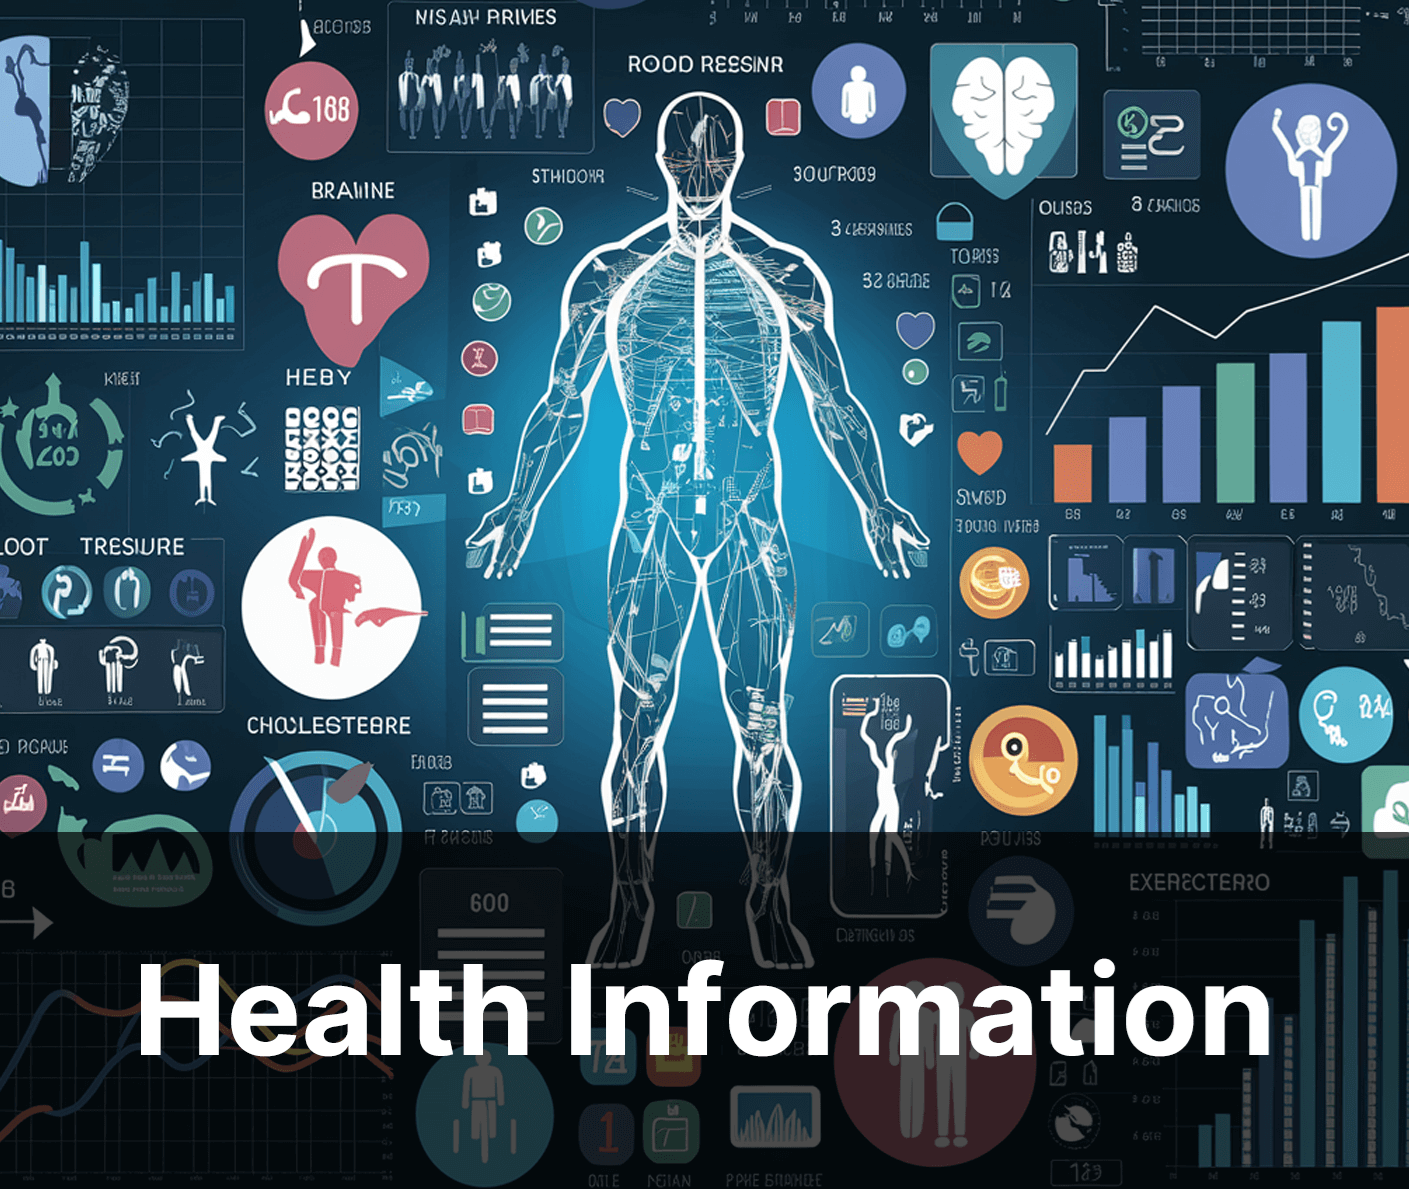 health info